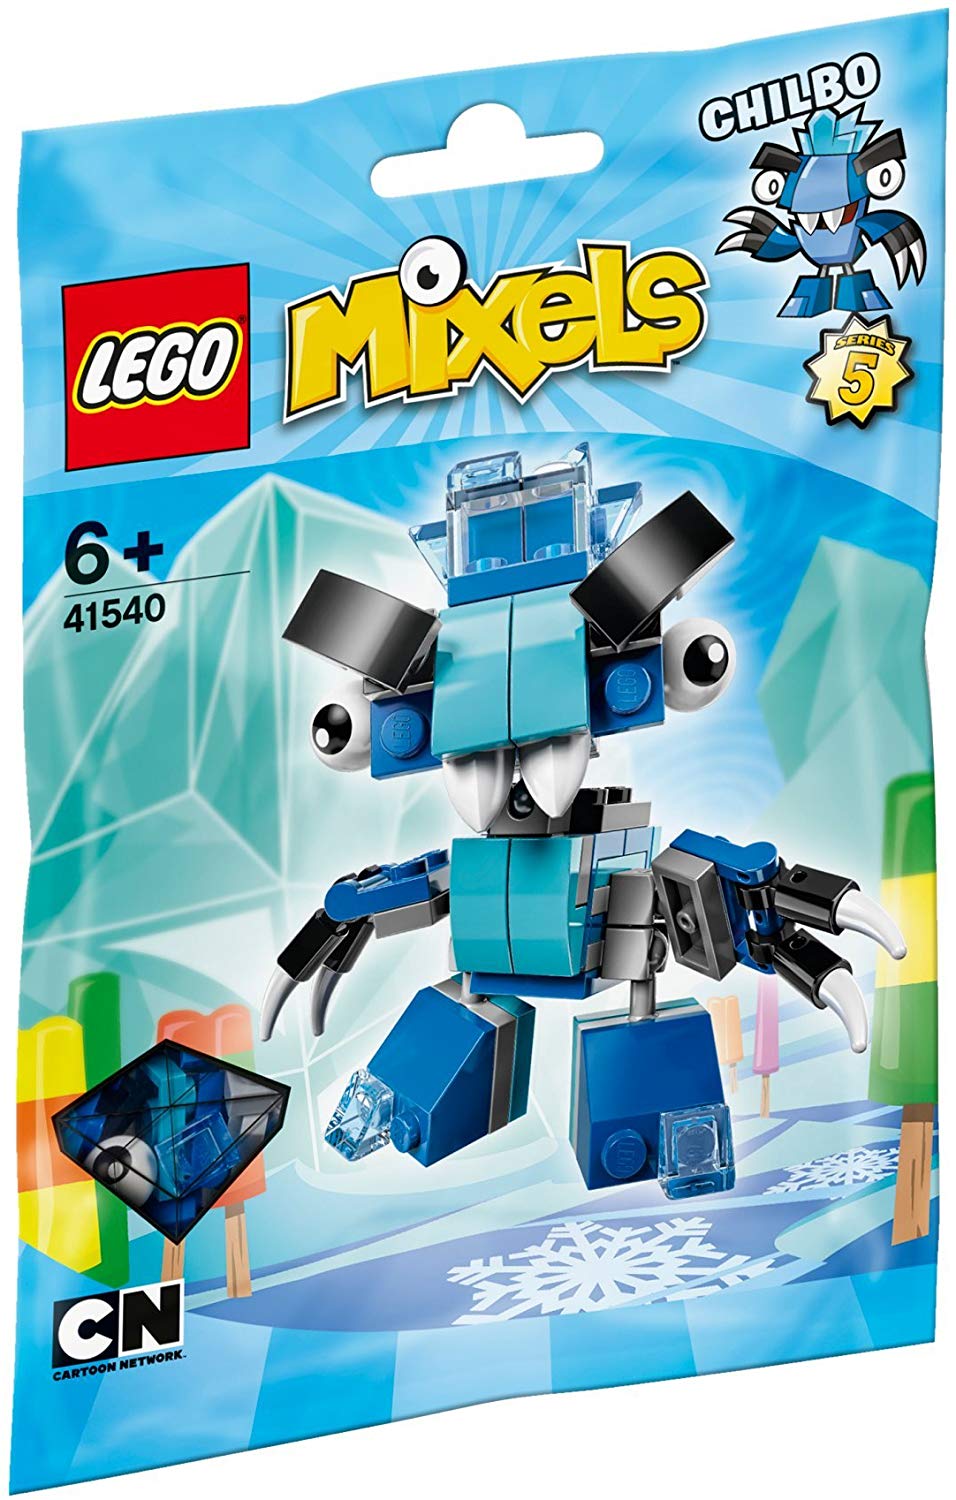 Lego Mixels Wave 5 Chilbo 41540 By Lego